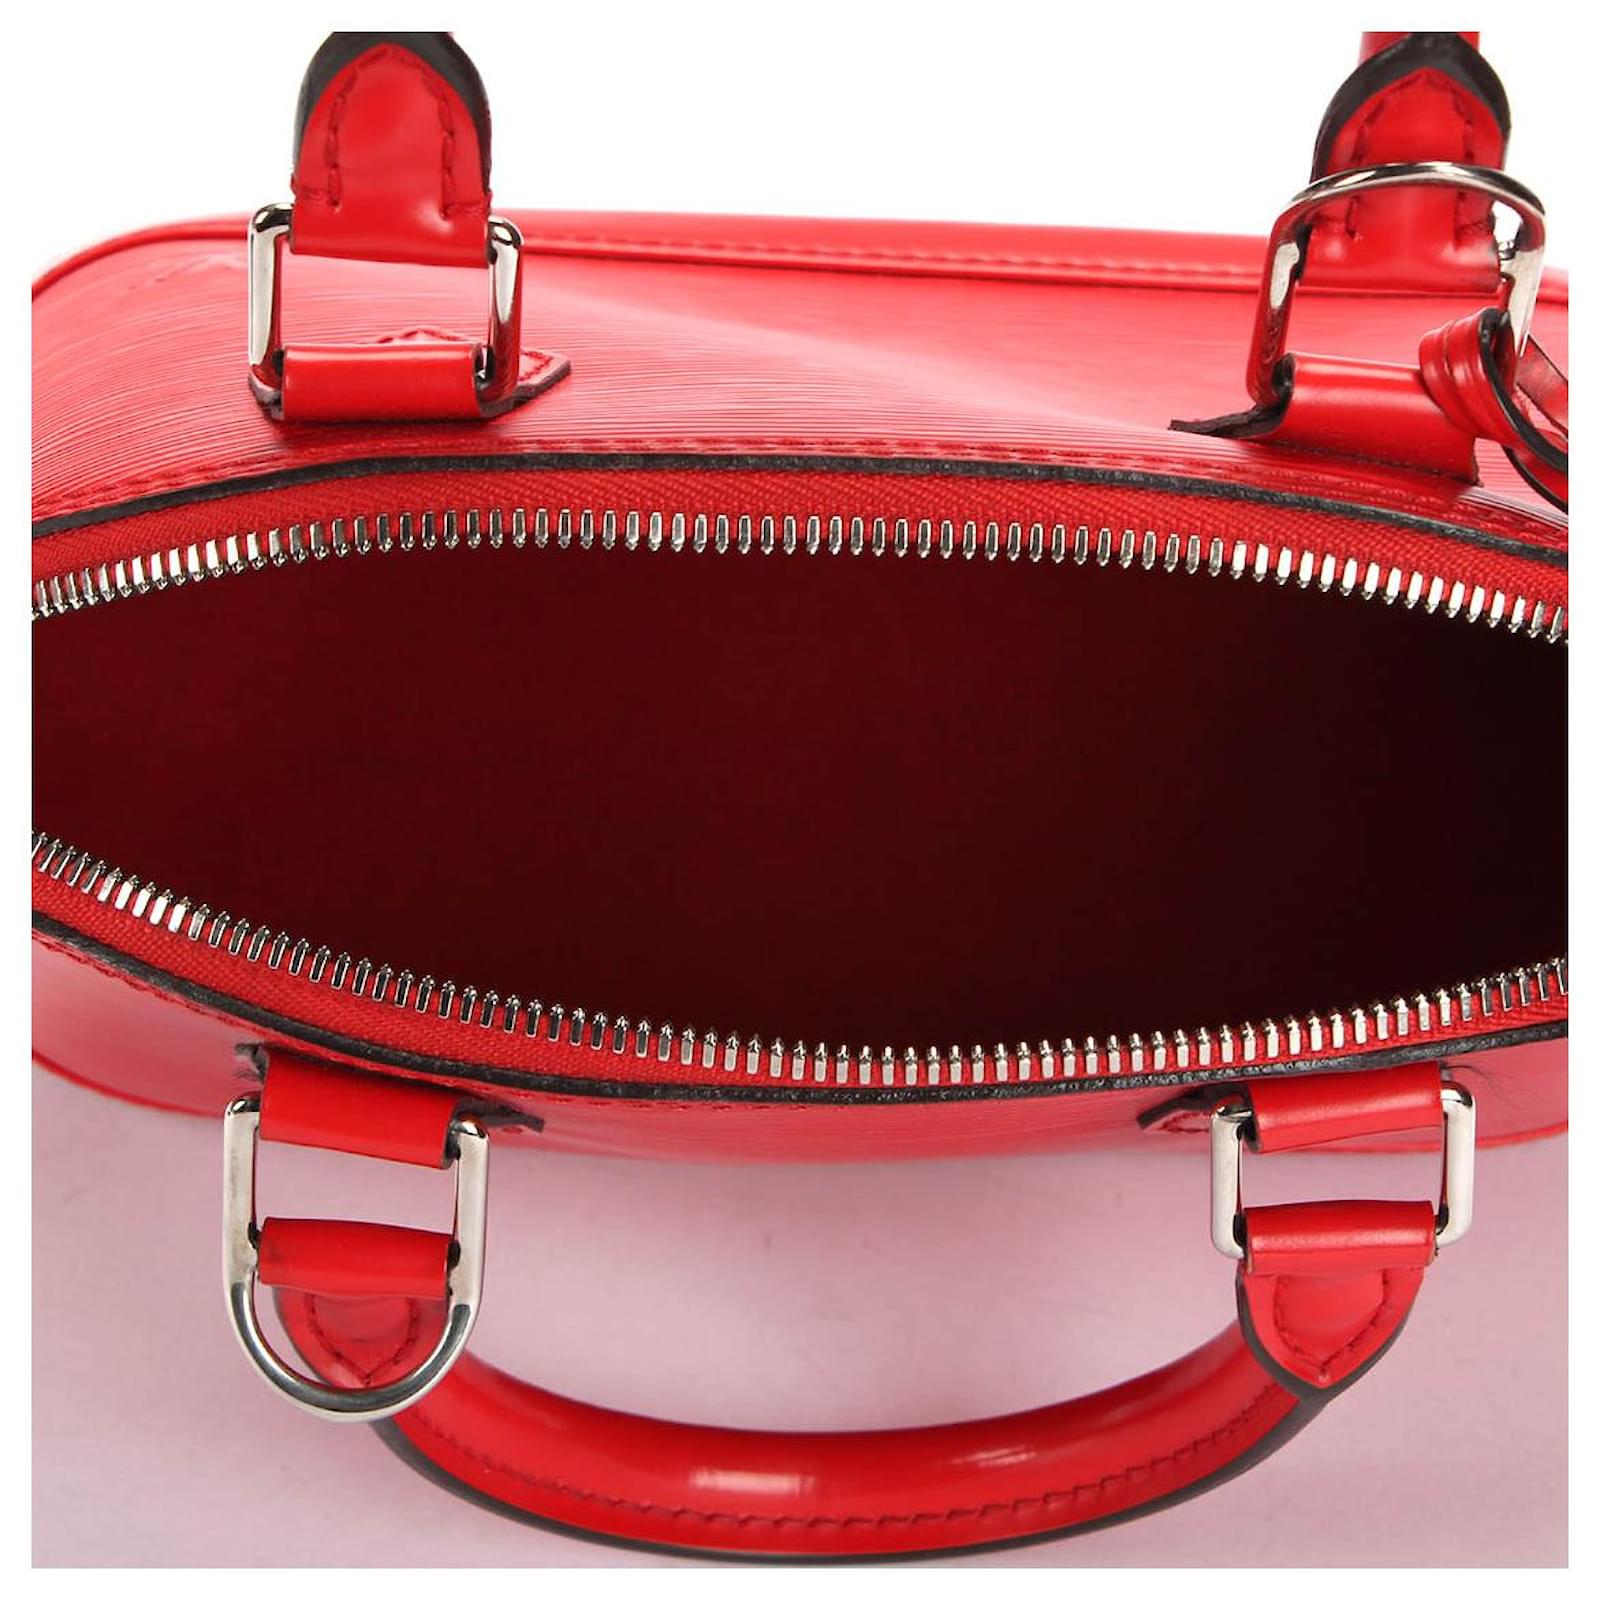 Alma bb calfskin handbag Louis Vuitton Pink in Pony-style calfskin